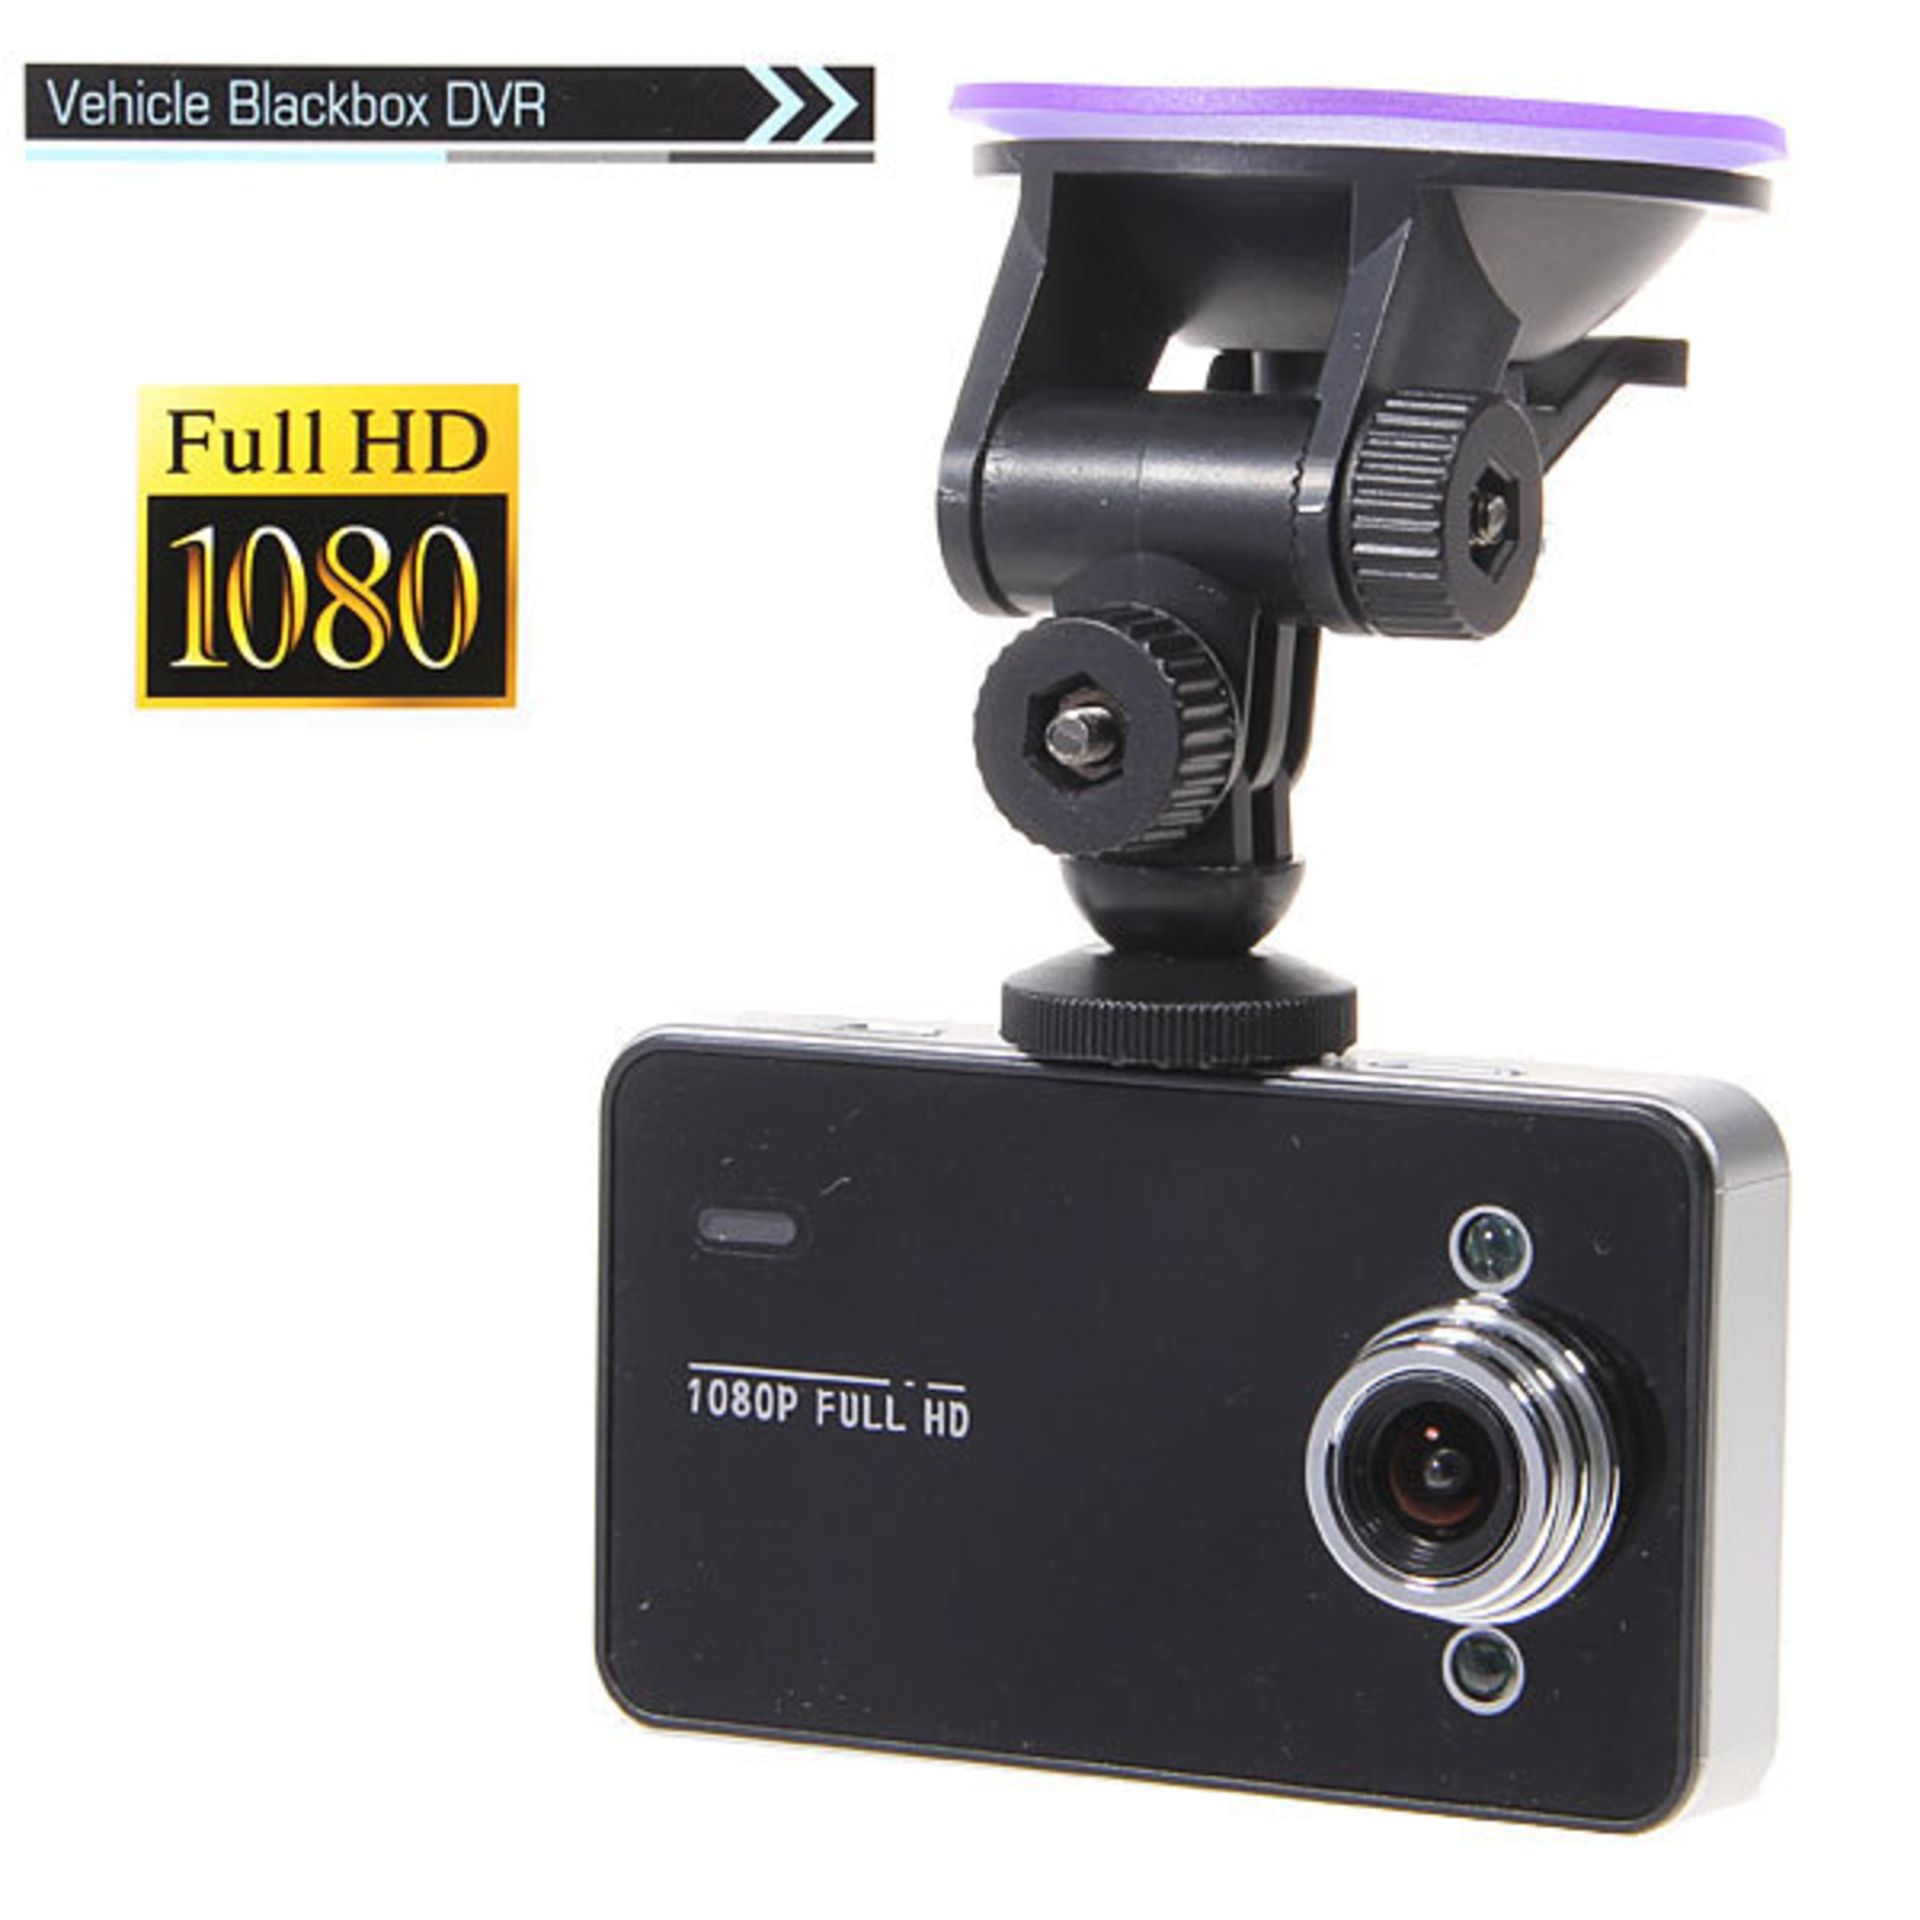 V *TRADE QTY* Brand New Car Camera Blackbox DVR With Motion Detecting HD/DVR 1080p X 8 YOUR BID